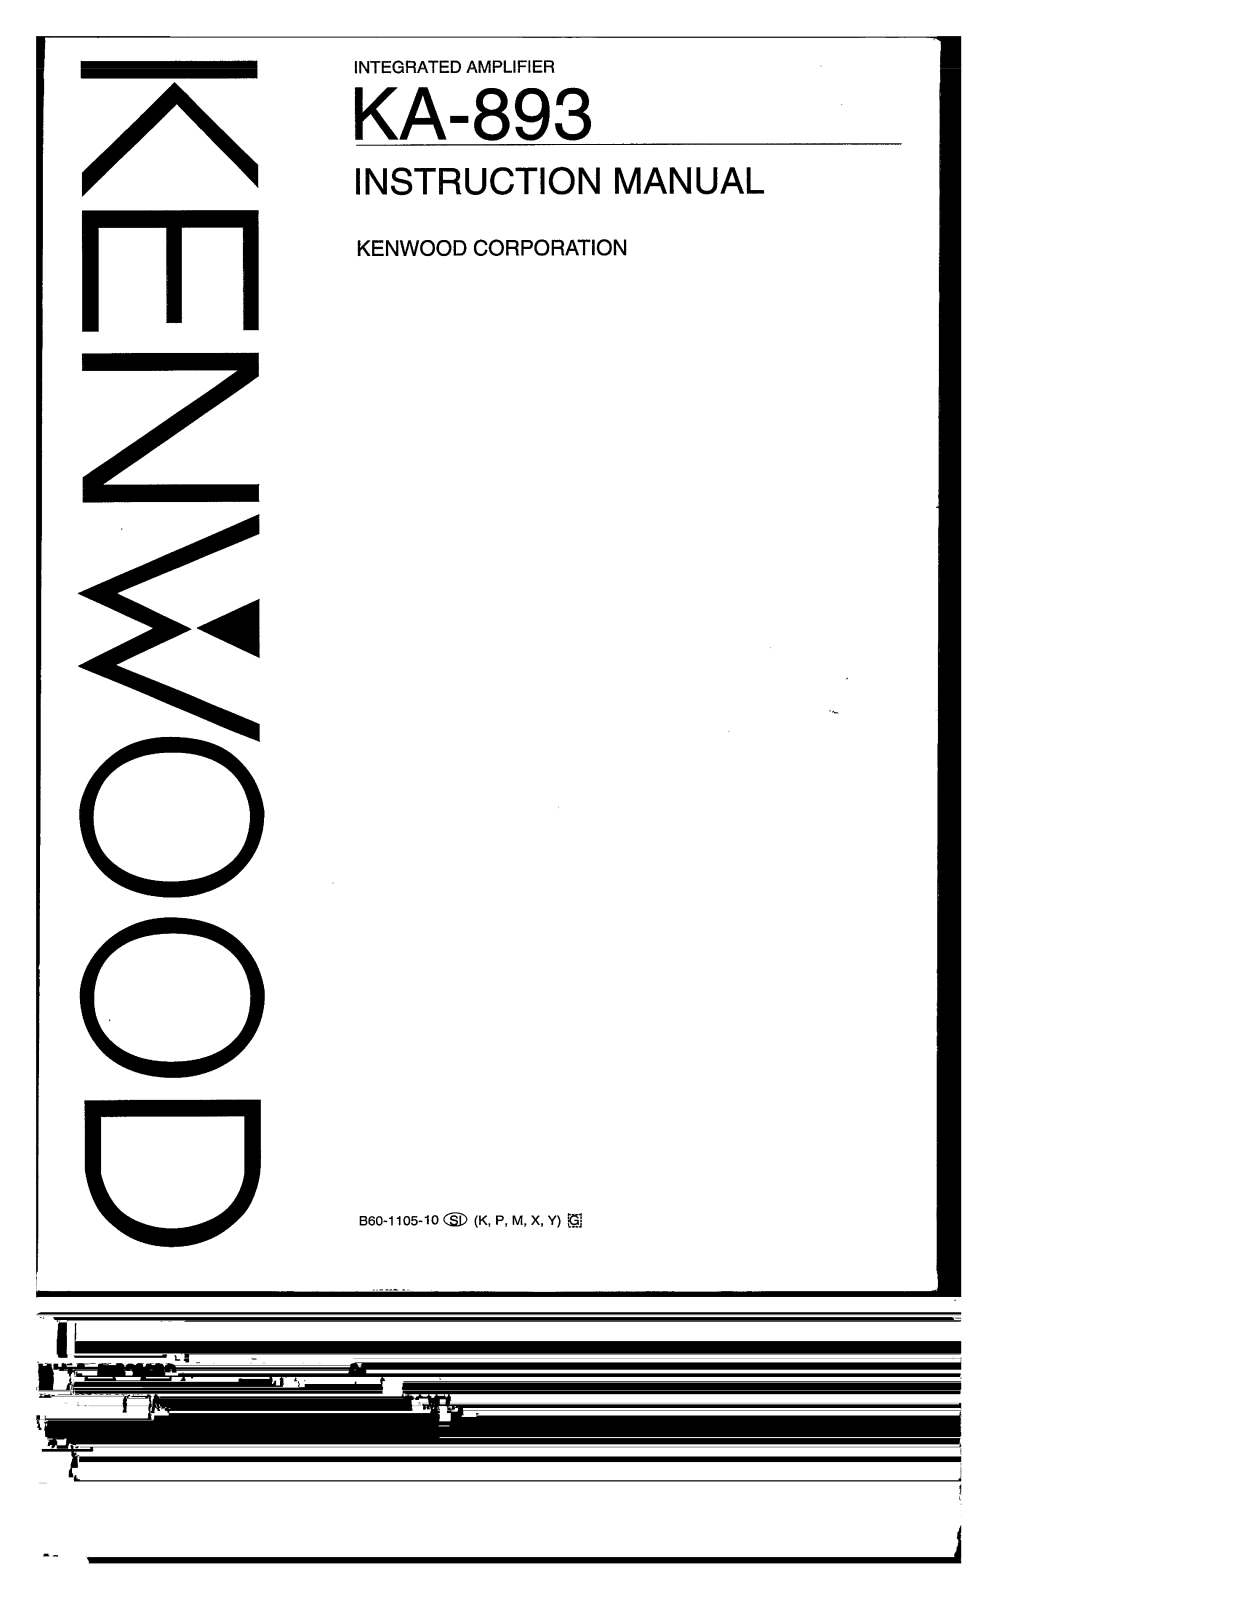 Kenwood KA-893 Owner's Manual